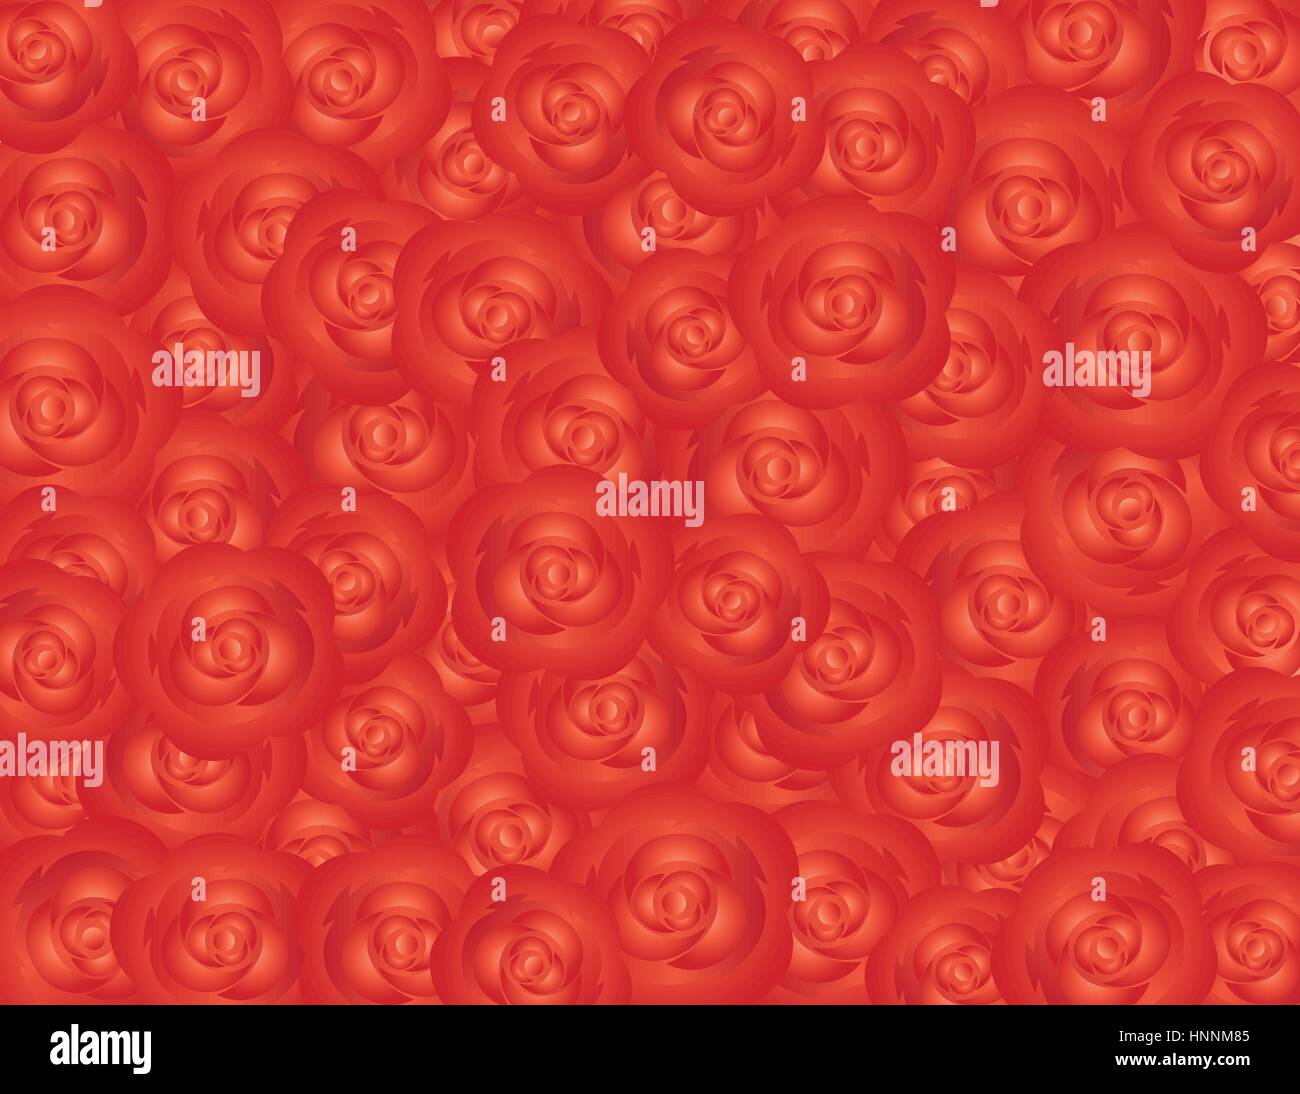 Rote Rosen Textur Hintergrund Illustration Stock Vektor